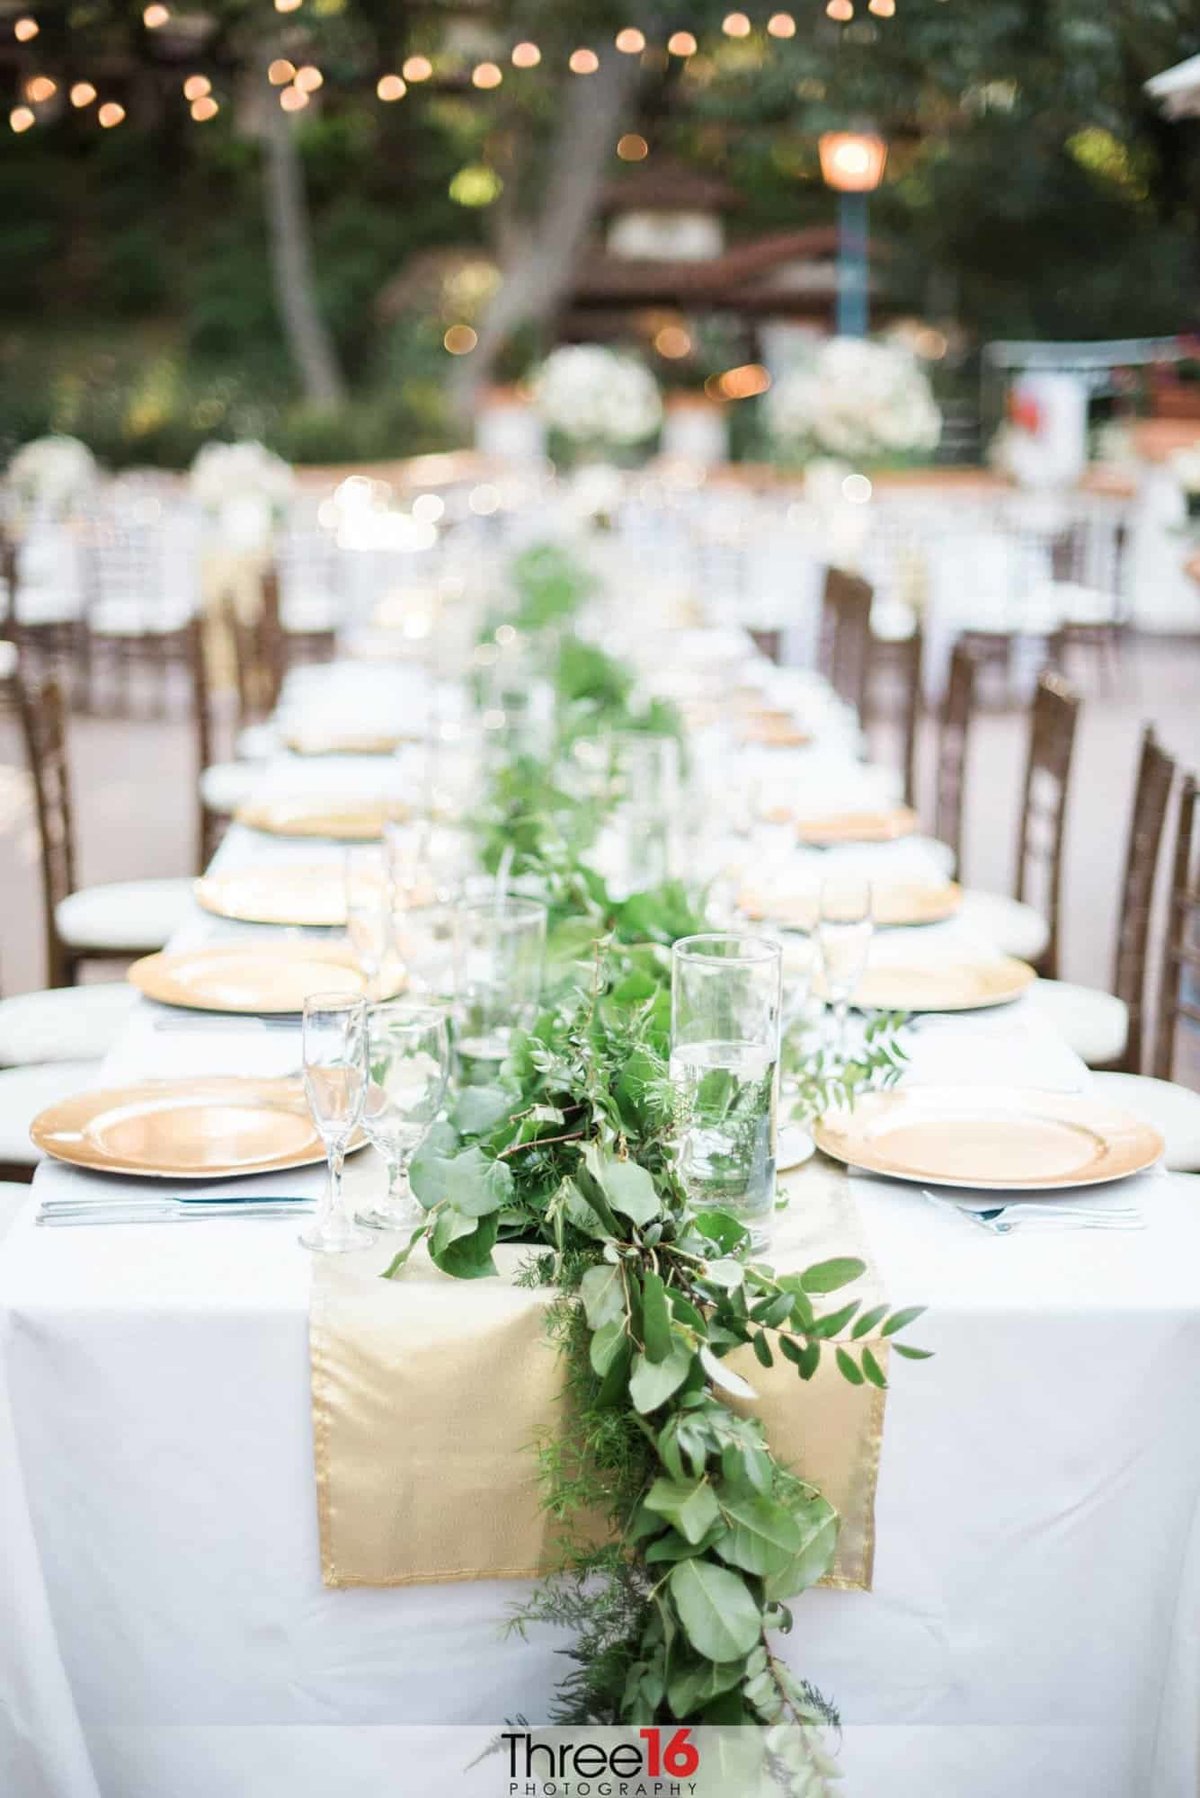 Table plated for a Rancho Las Lomas wedding reception